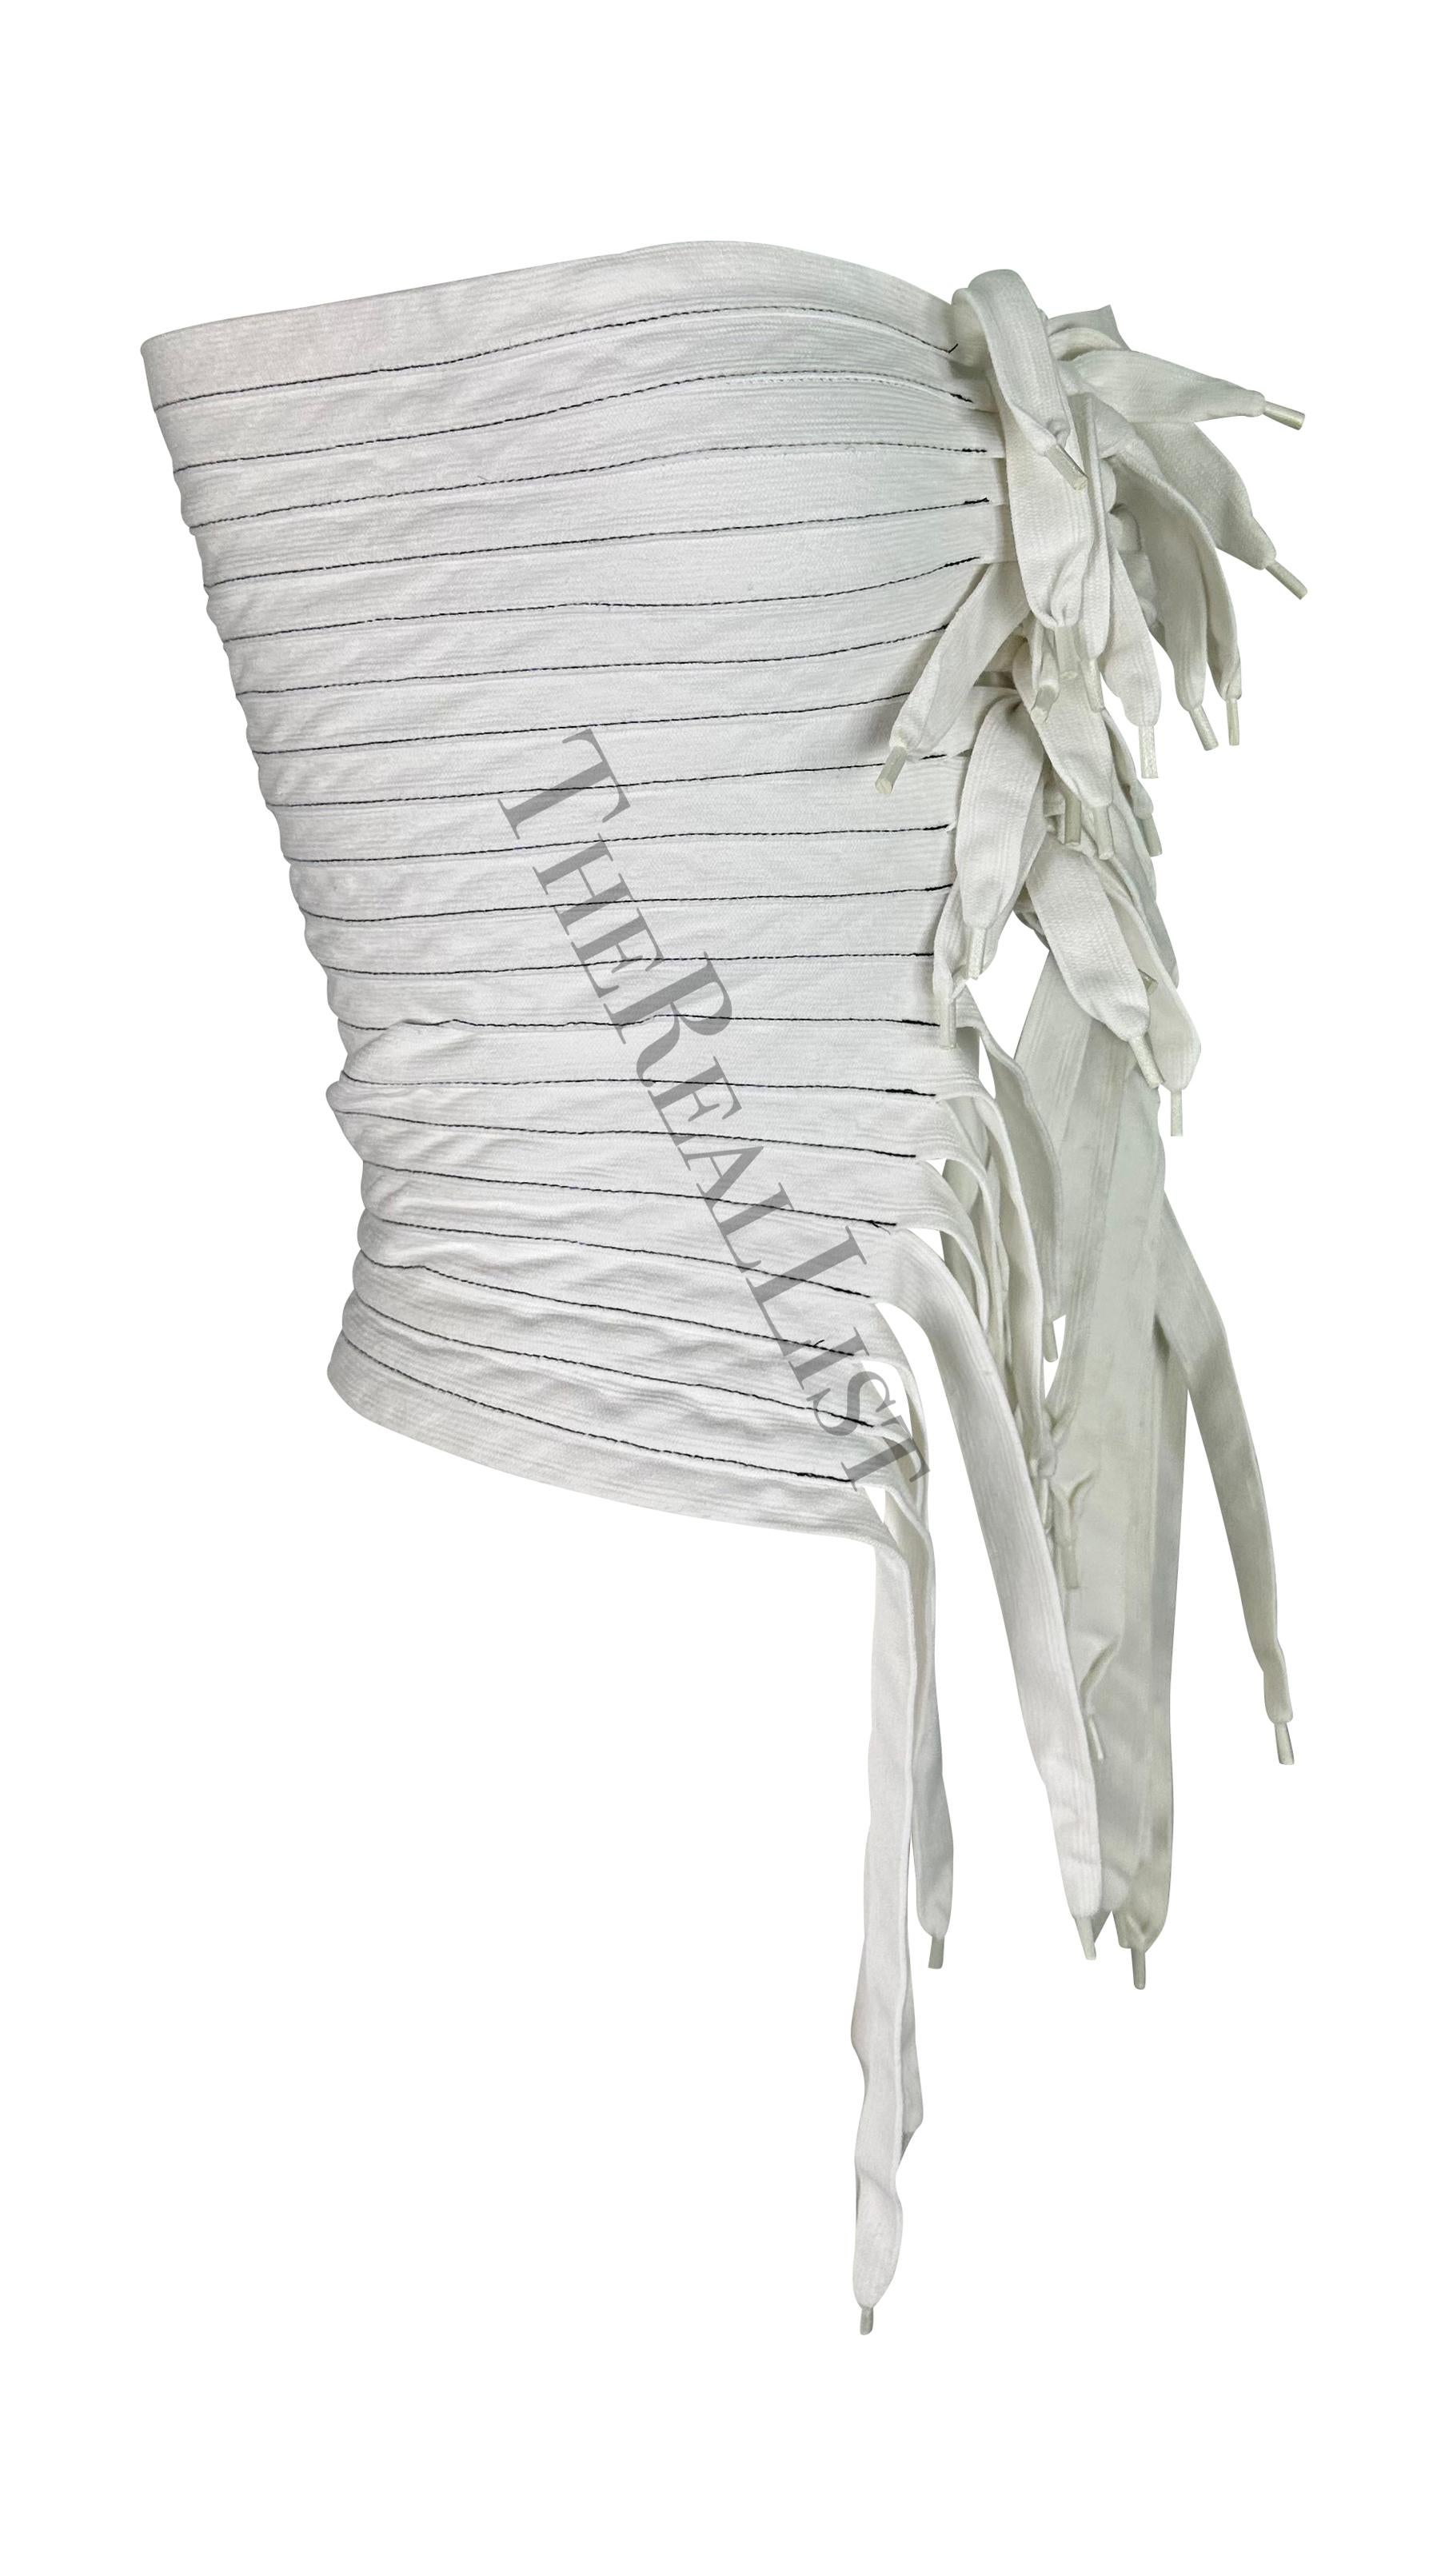 S/S 2004 Margiela Haute Couture Artisanal Repurposed Shoelace White Crop Top  4